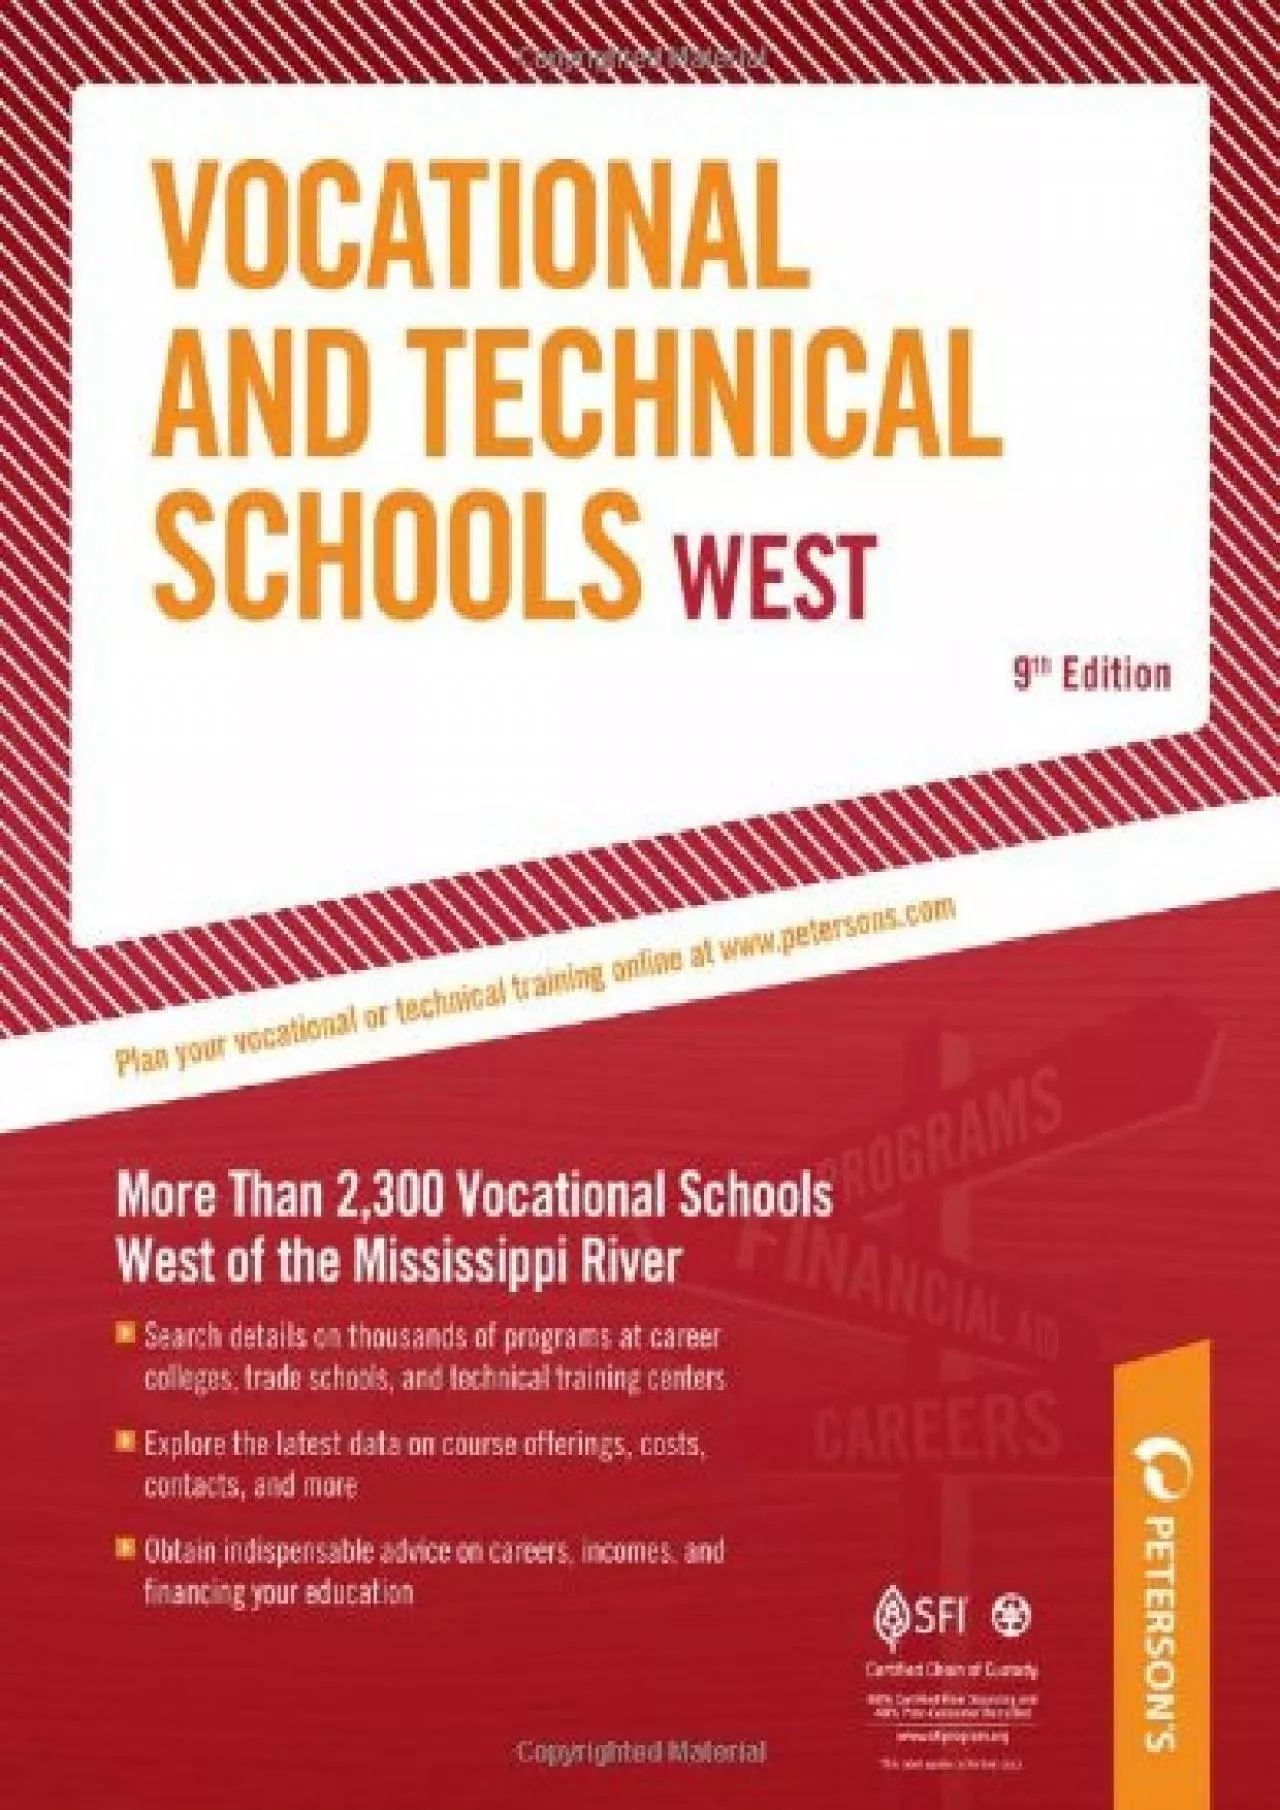 [DOWNLOAD] Vocational  Technical Schools West: More Than 2,300 Vocational Schools West